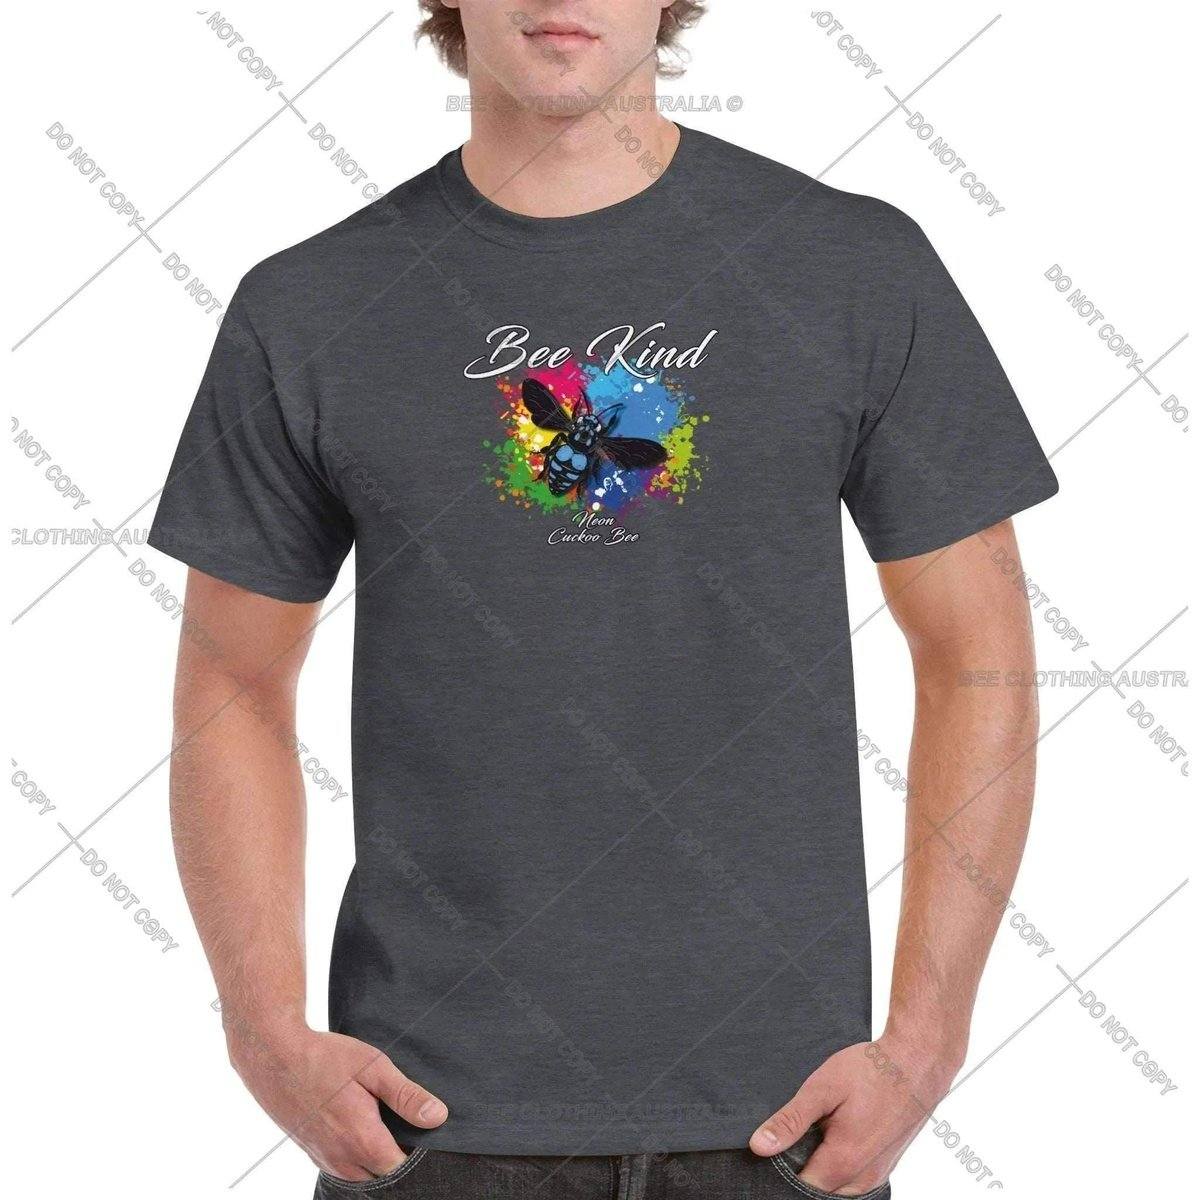 Bee Kind - Neon Cuckoo Bee - Native Bee T-Shirt Unisex - Classic Unisex Crewneck T-shirt Australia Online Color